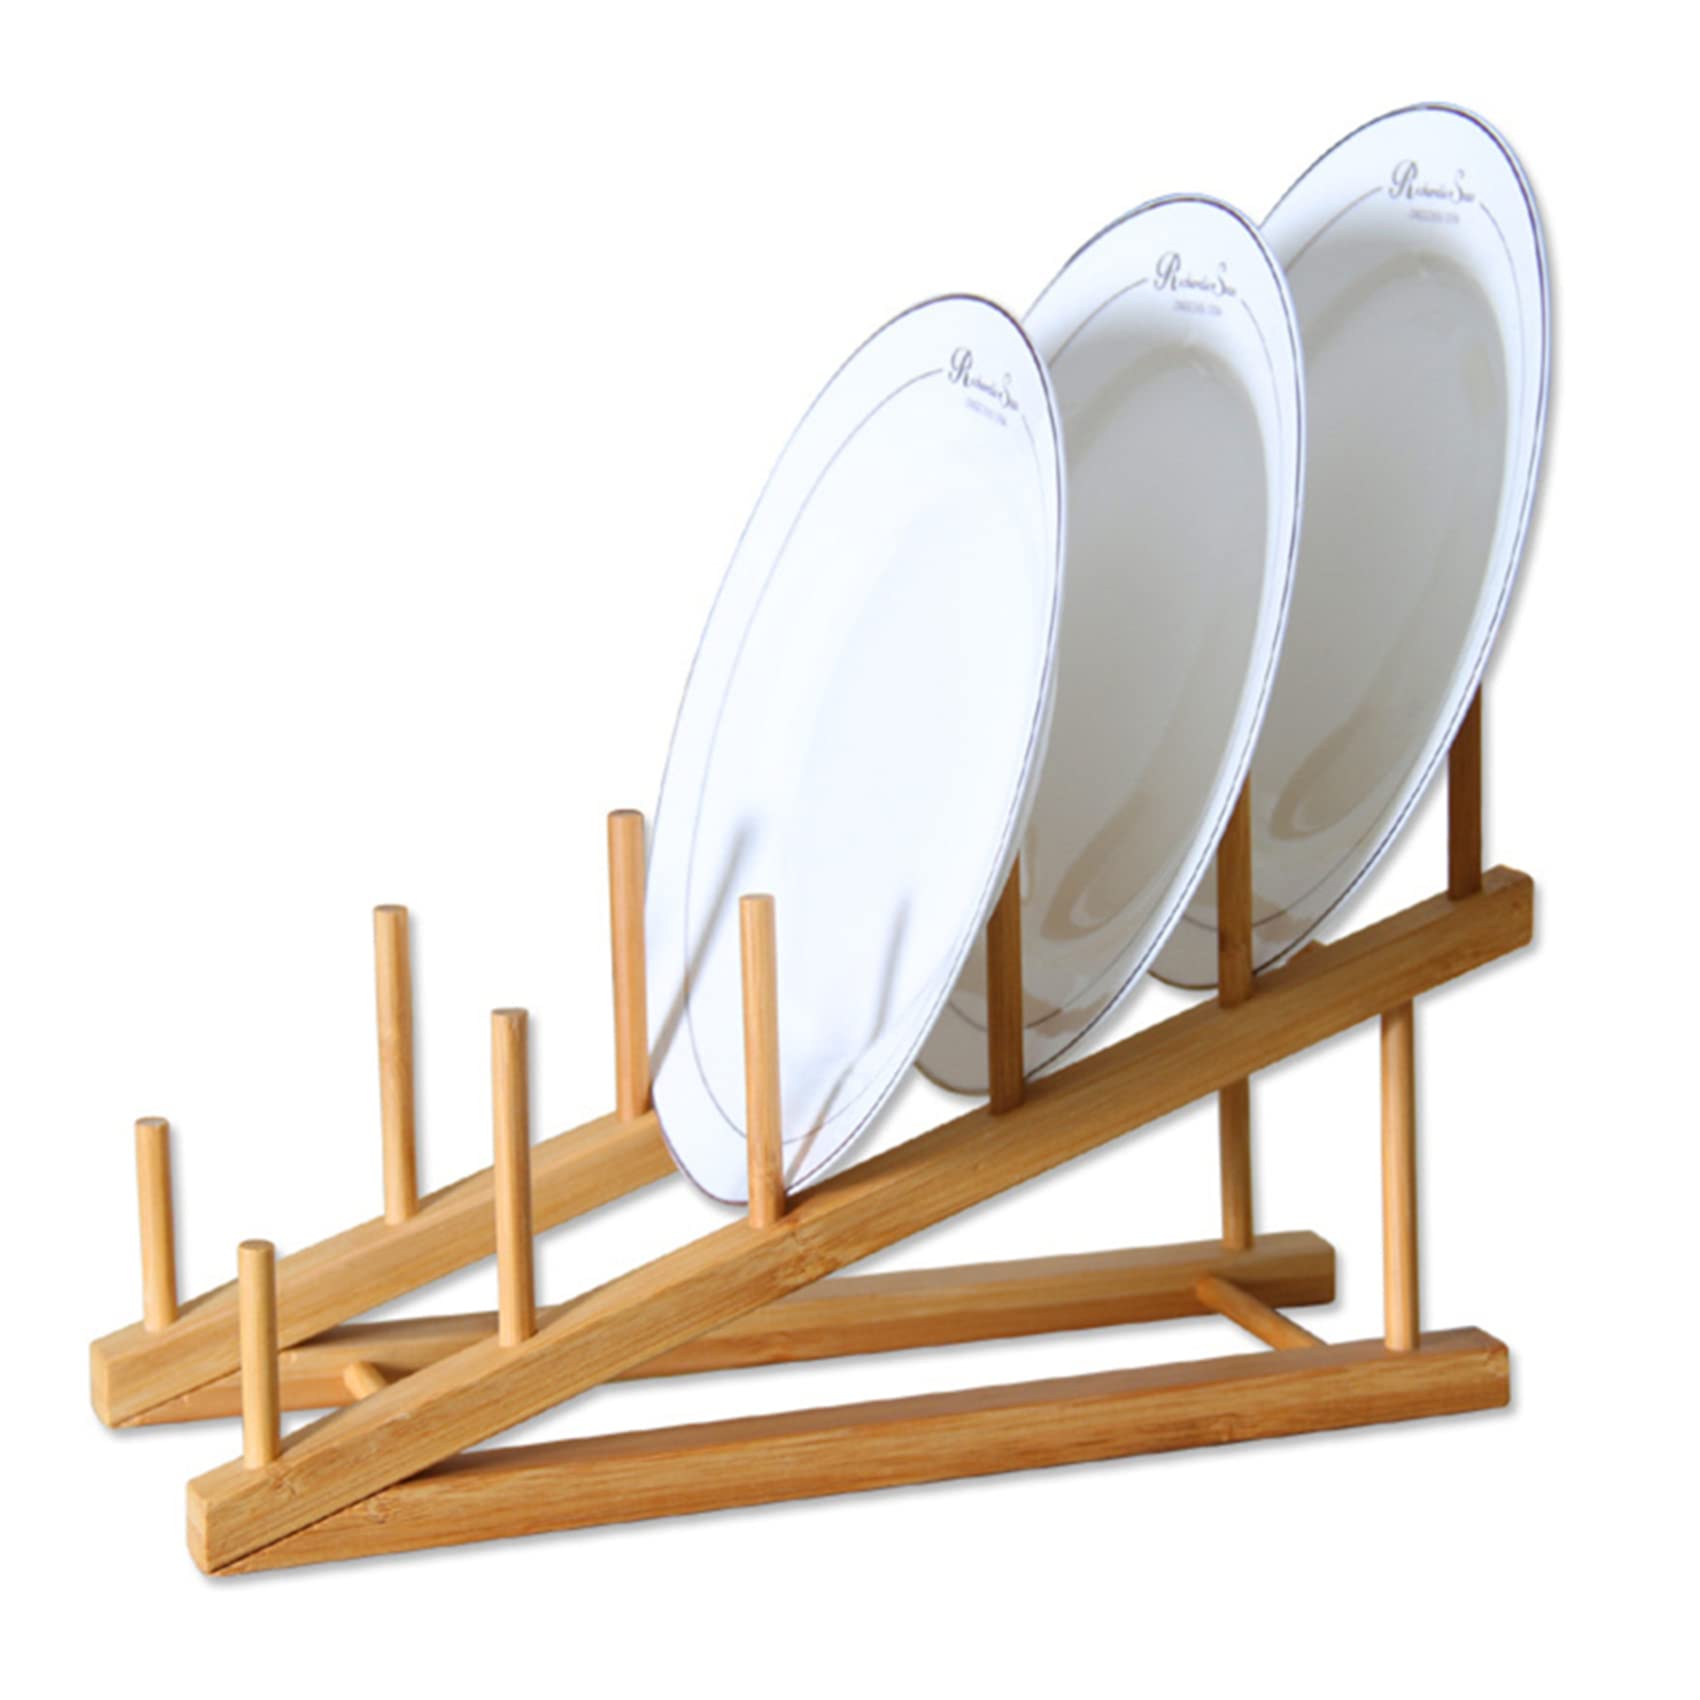 Hsakess Wooden Dish Rack Minimalist Creative Drainage Plate Stand Holder Kitchen Cabinet Organizer for Pot Lid Tableware